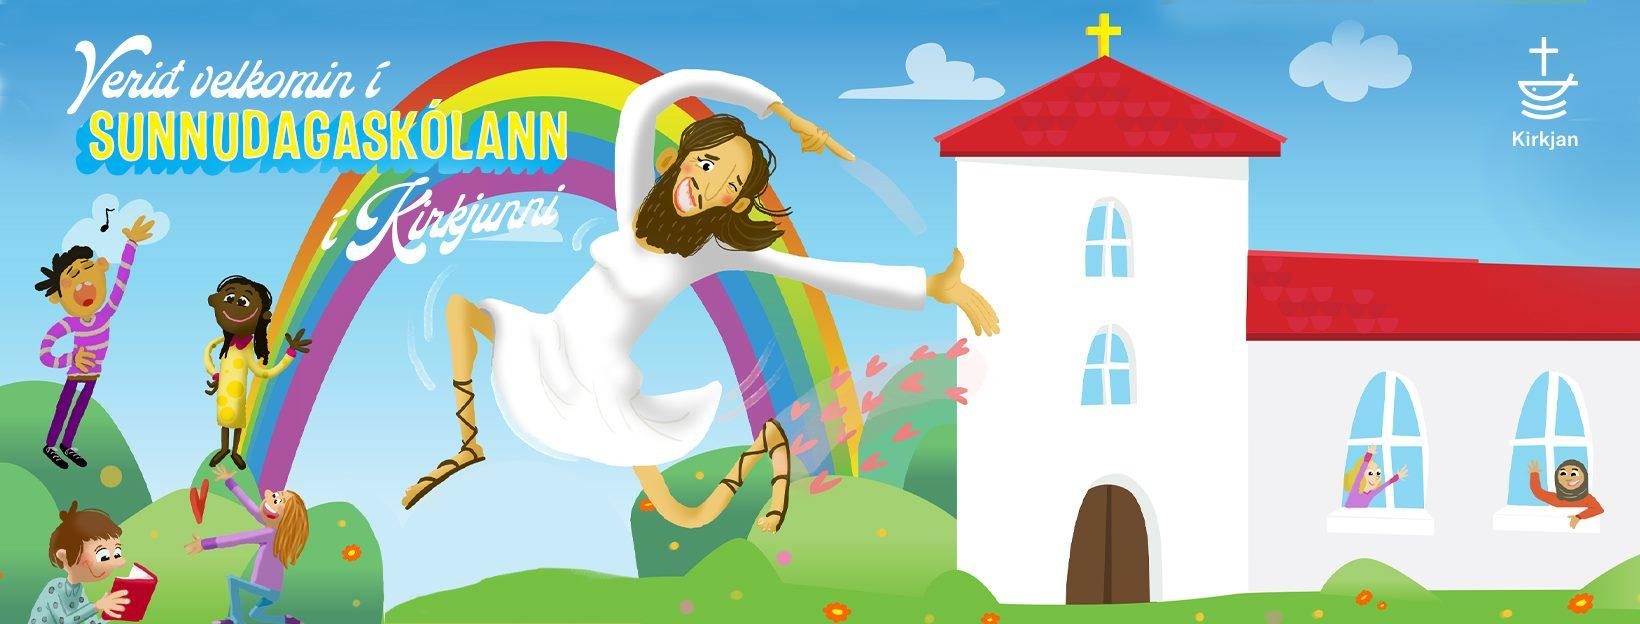 islande affiche jesus transgenre